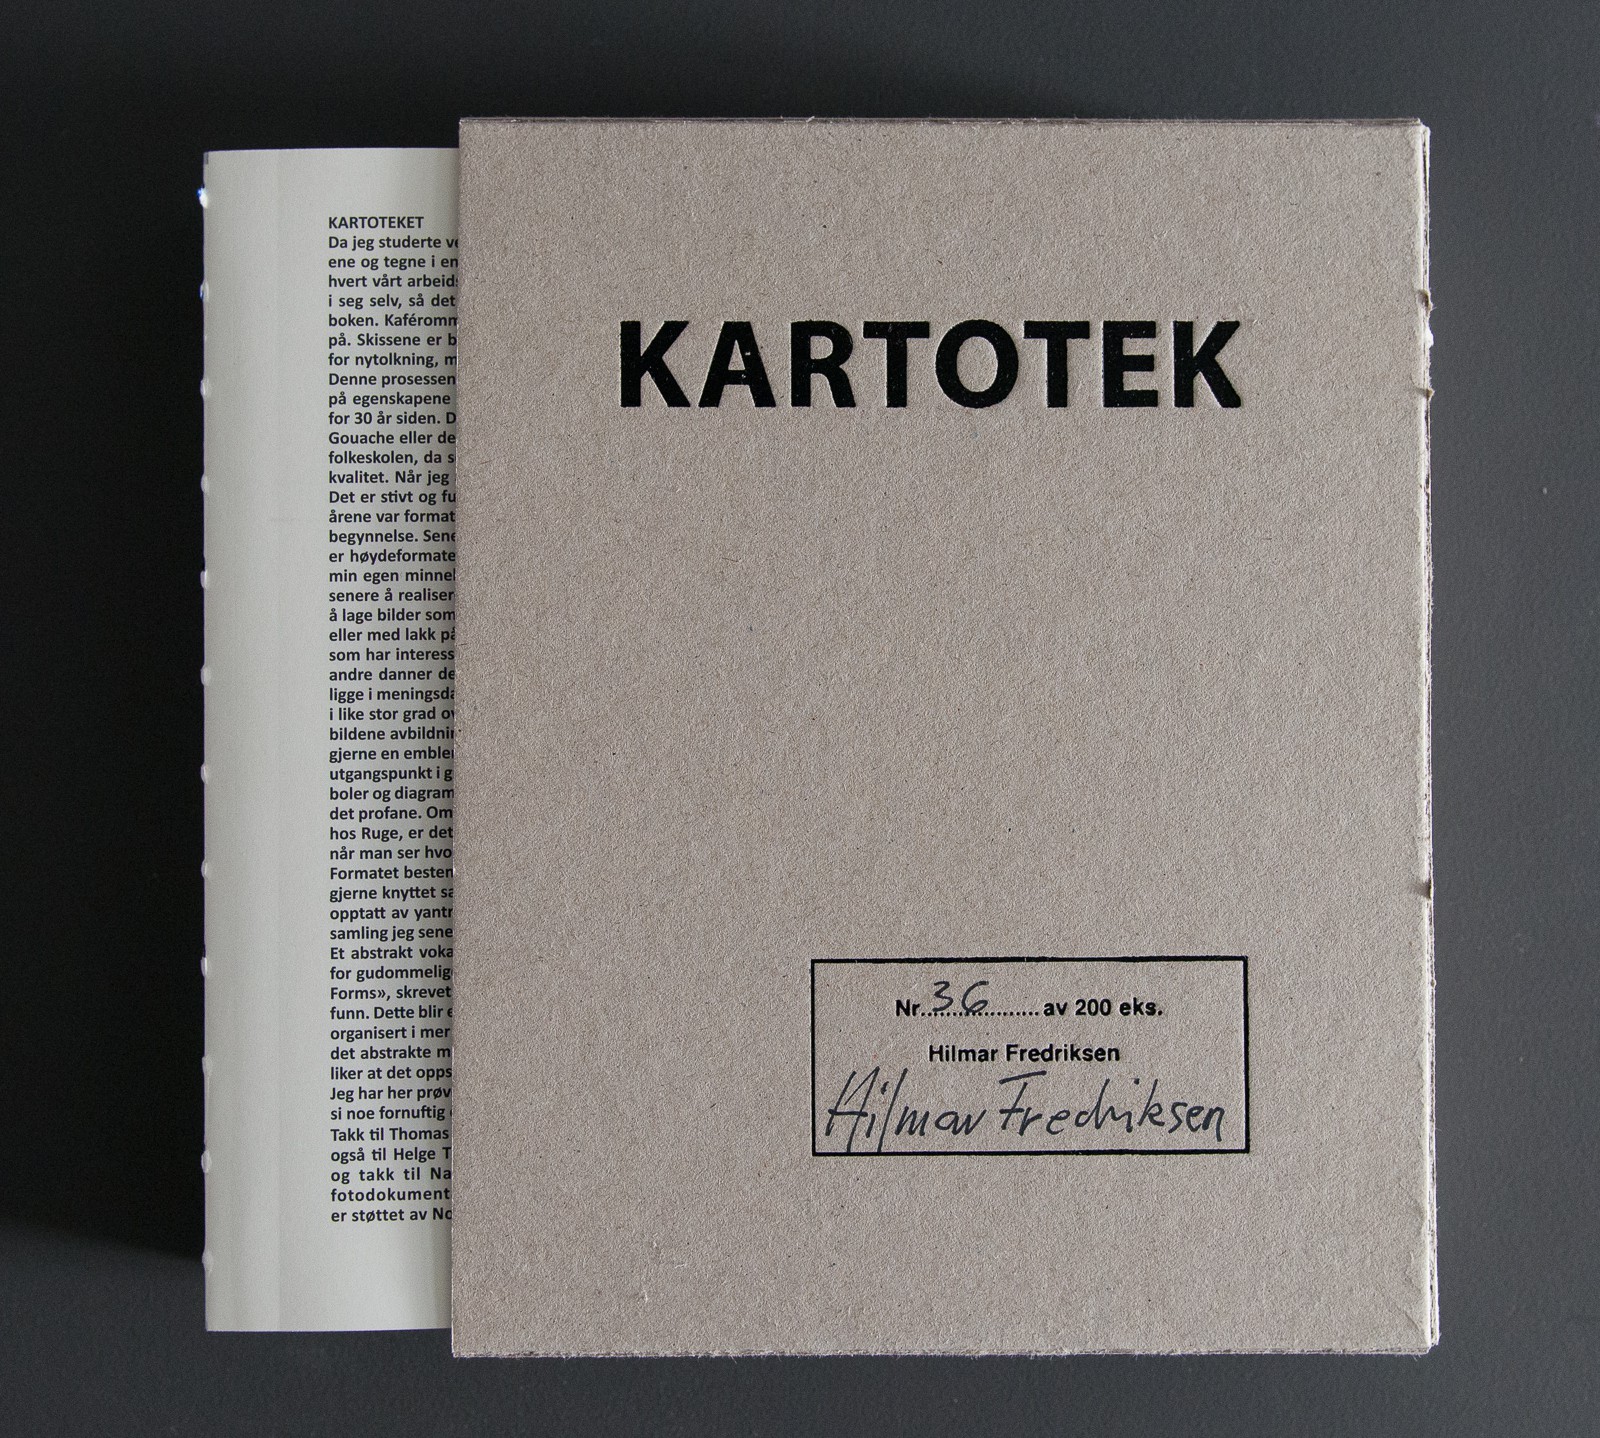 KARTOTEK (2016) — Hilmar Fredriksen